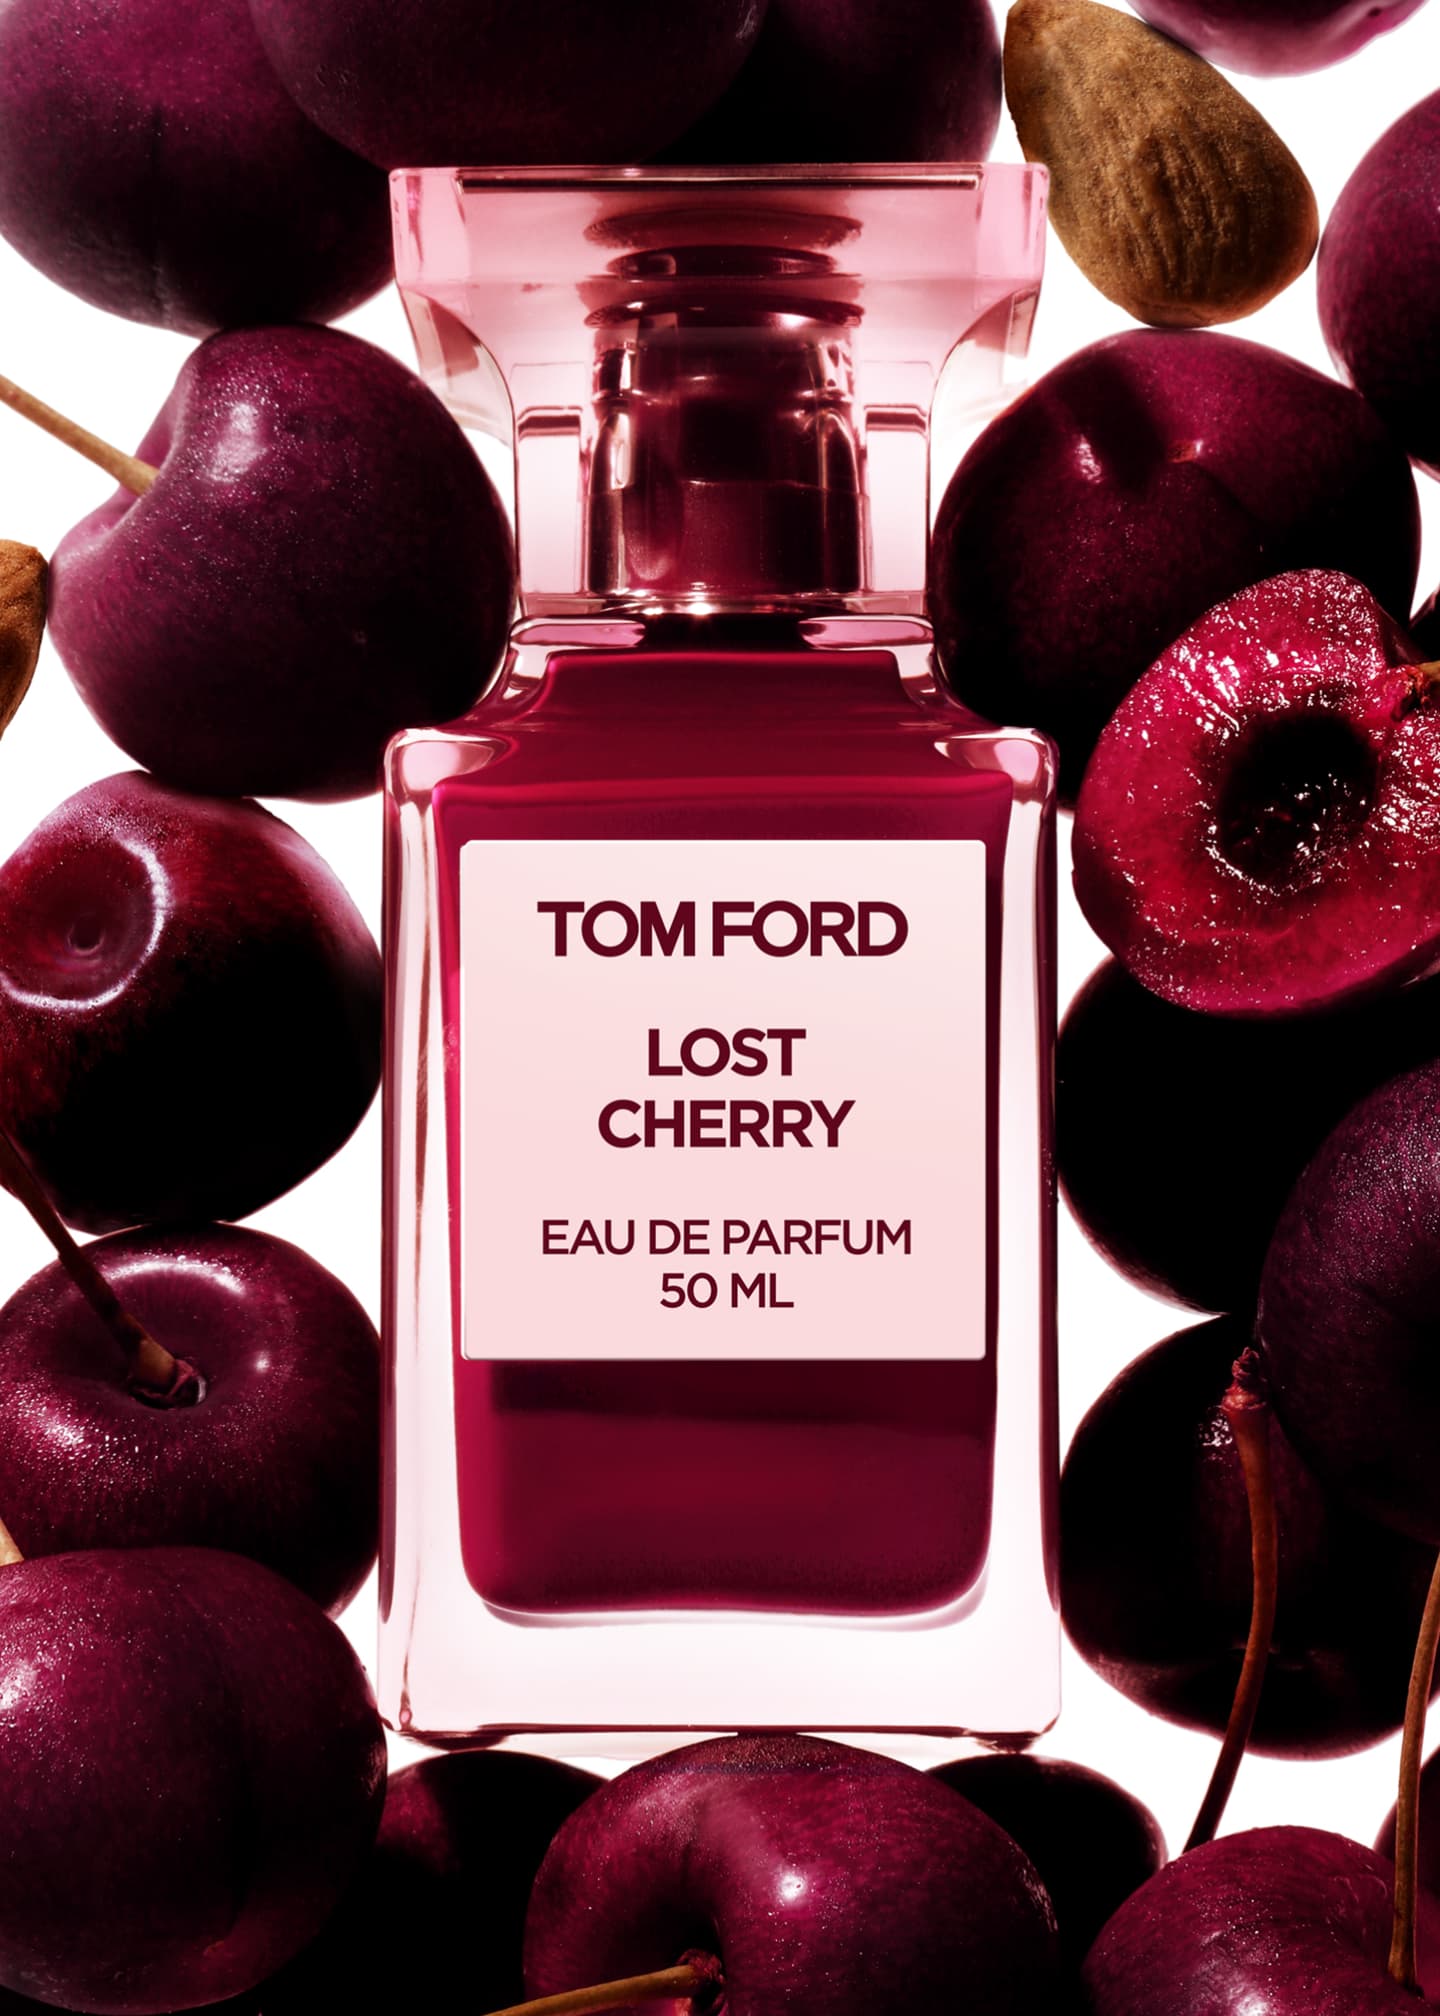 TOM FORD Lost Cherry Eau de Parfum Fragrance, 1.7 oz Image 2 of 3